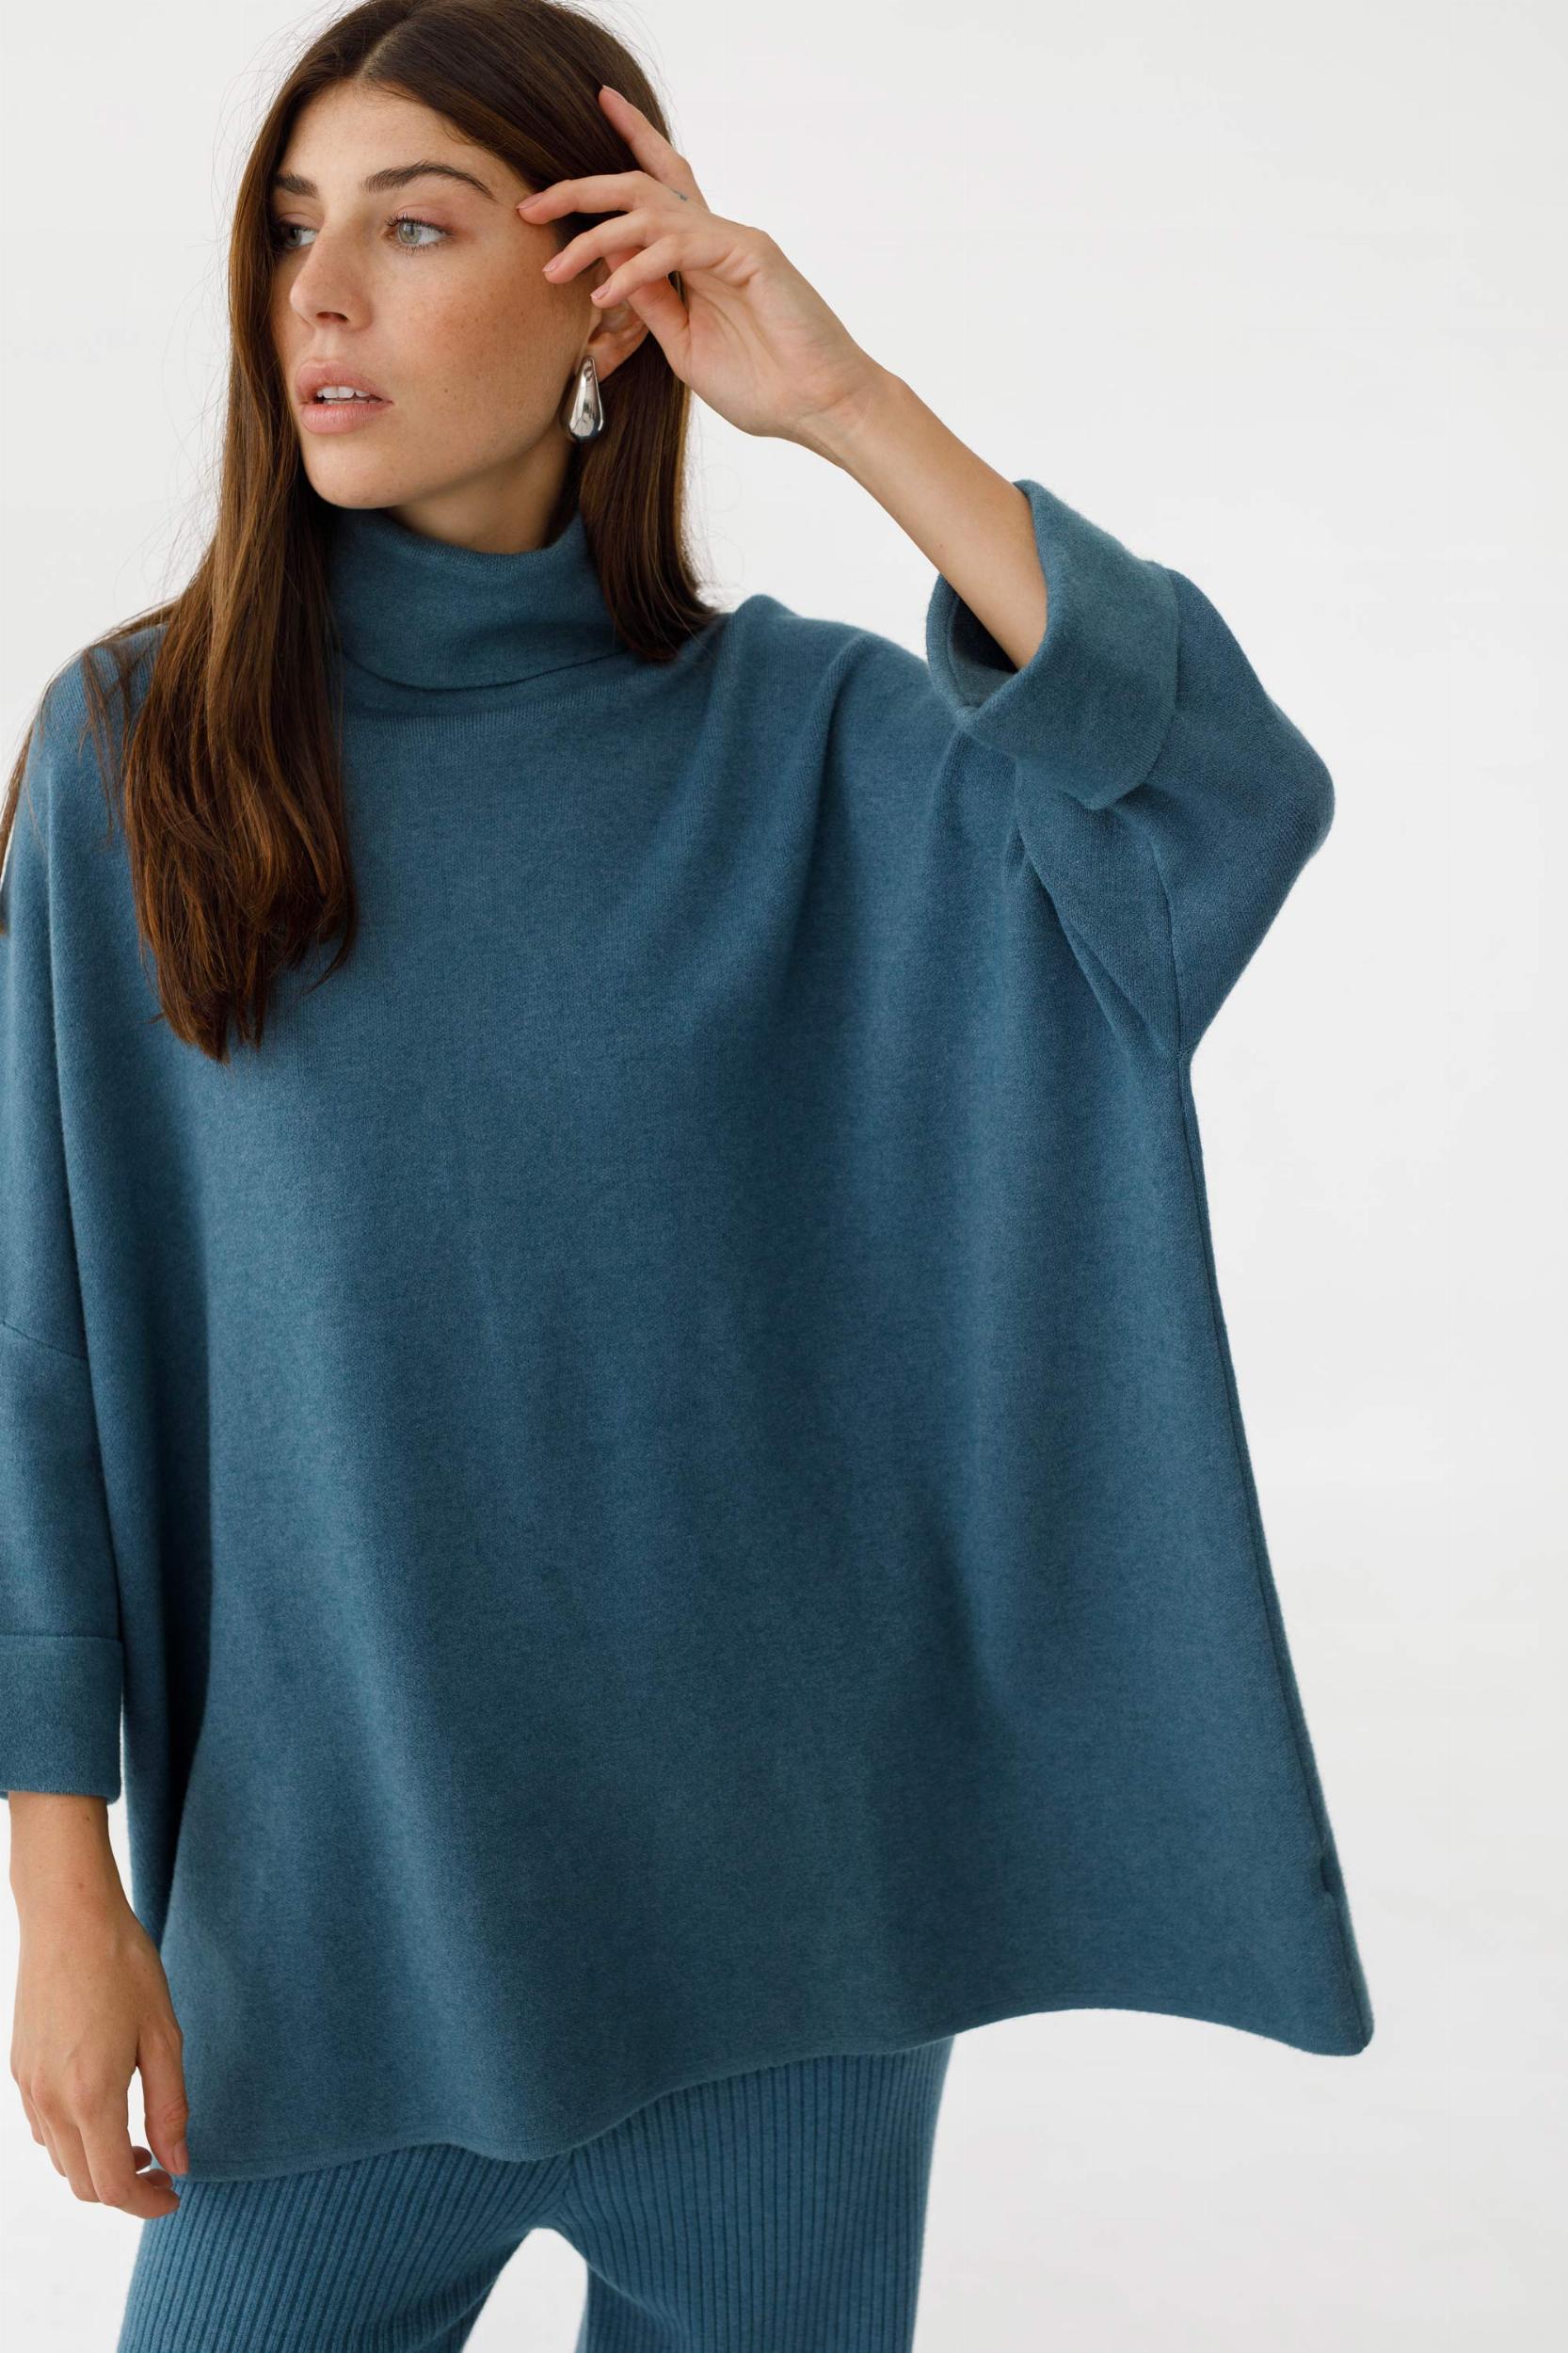 Sweater Vilma azul piedra talle unico